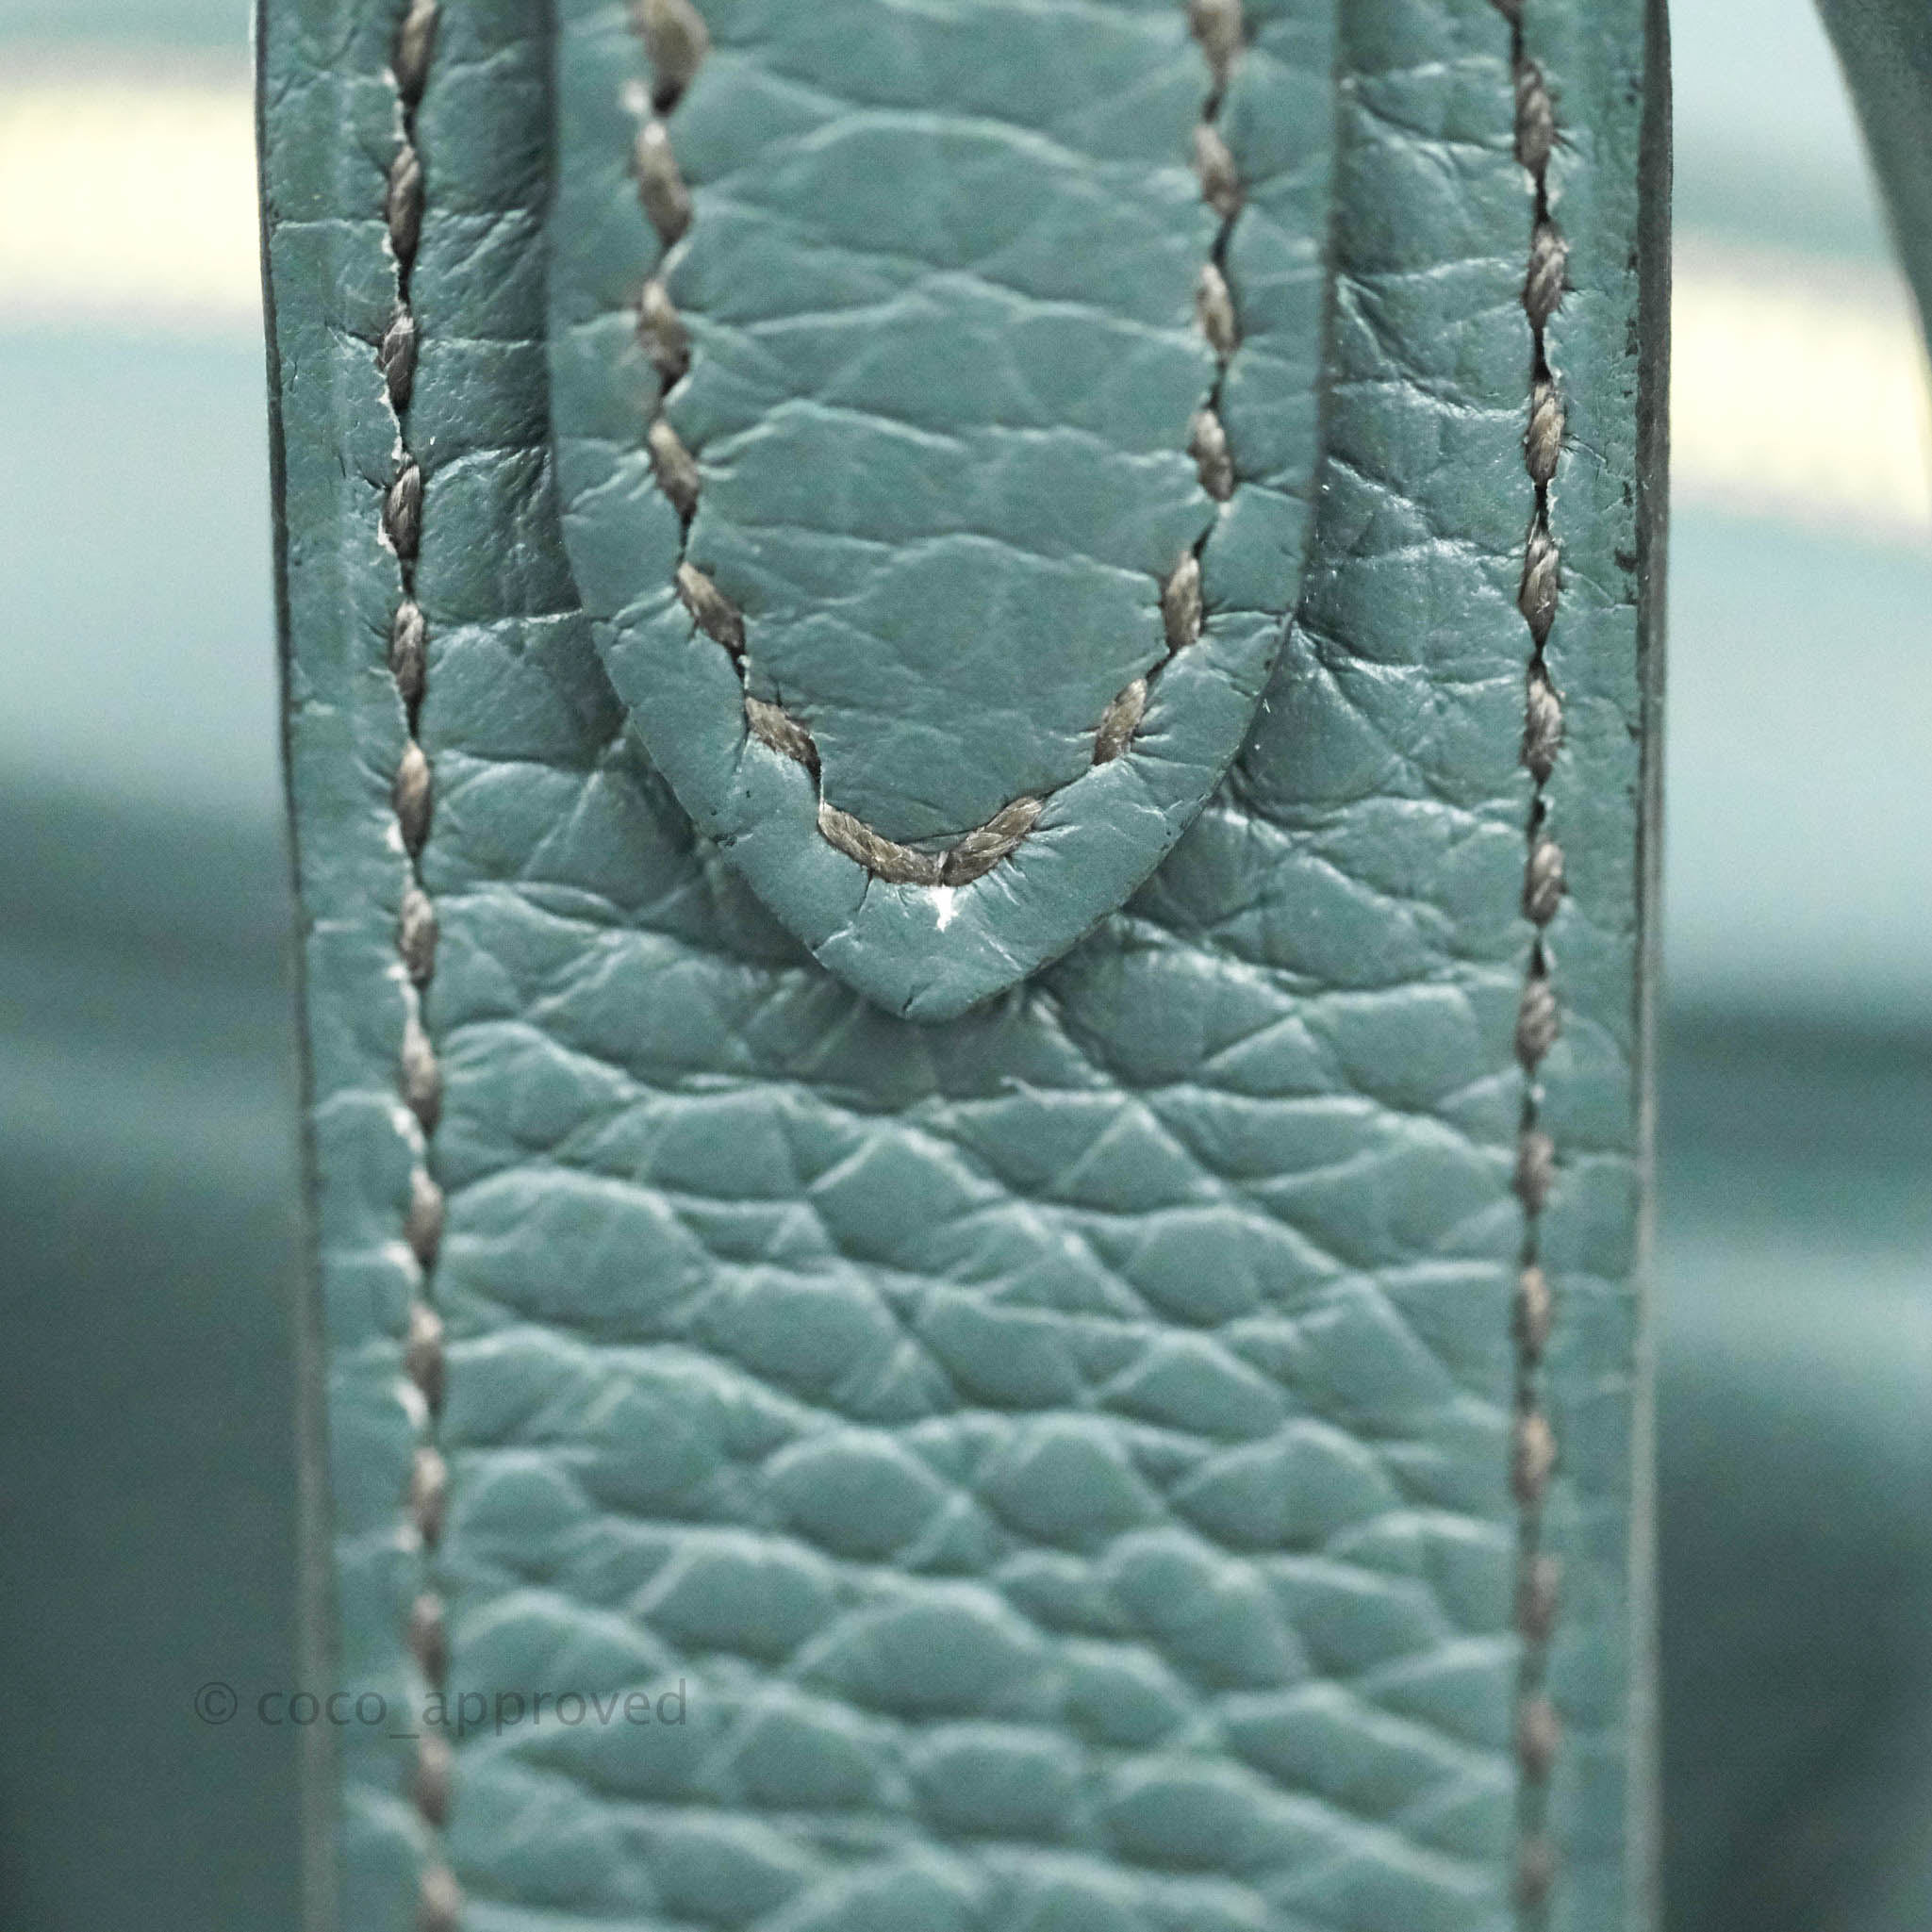 Hermès Lindy mini bag ₩ 8,980,000 Bleu de Prusse Clemence H079086CC7P  #hermesbleudeprusse #hermeslindy…